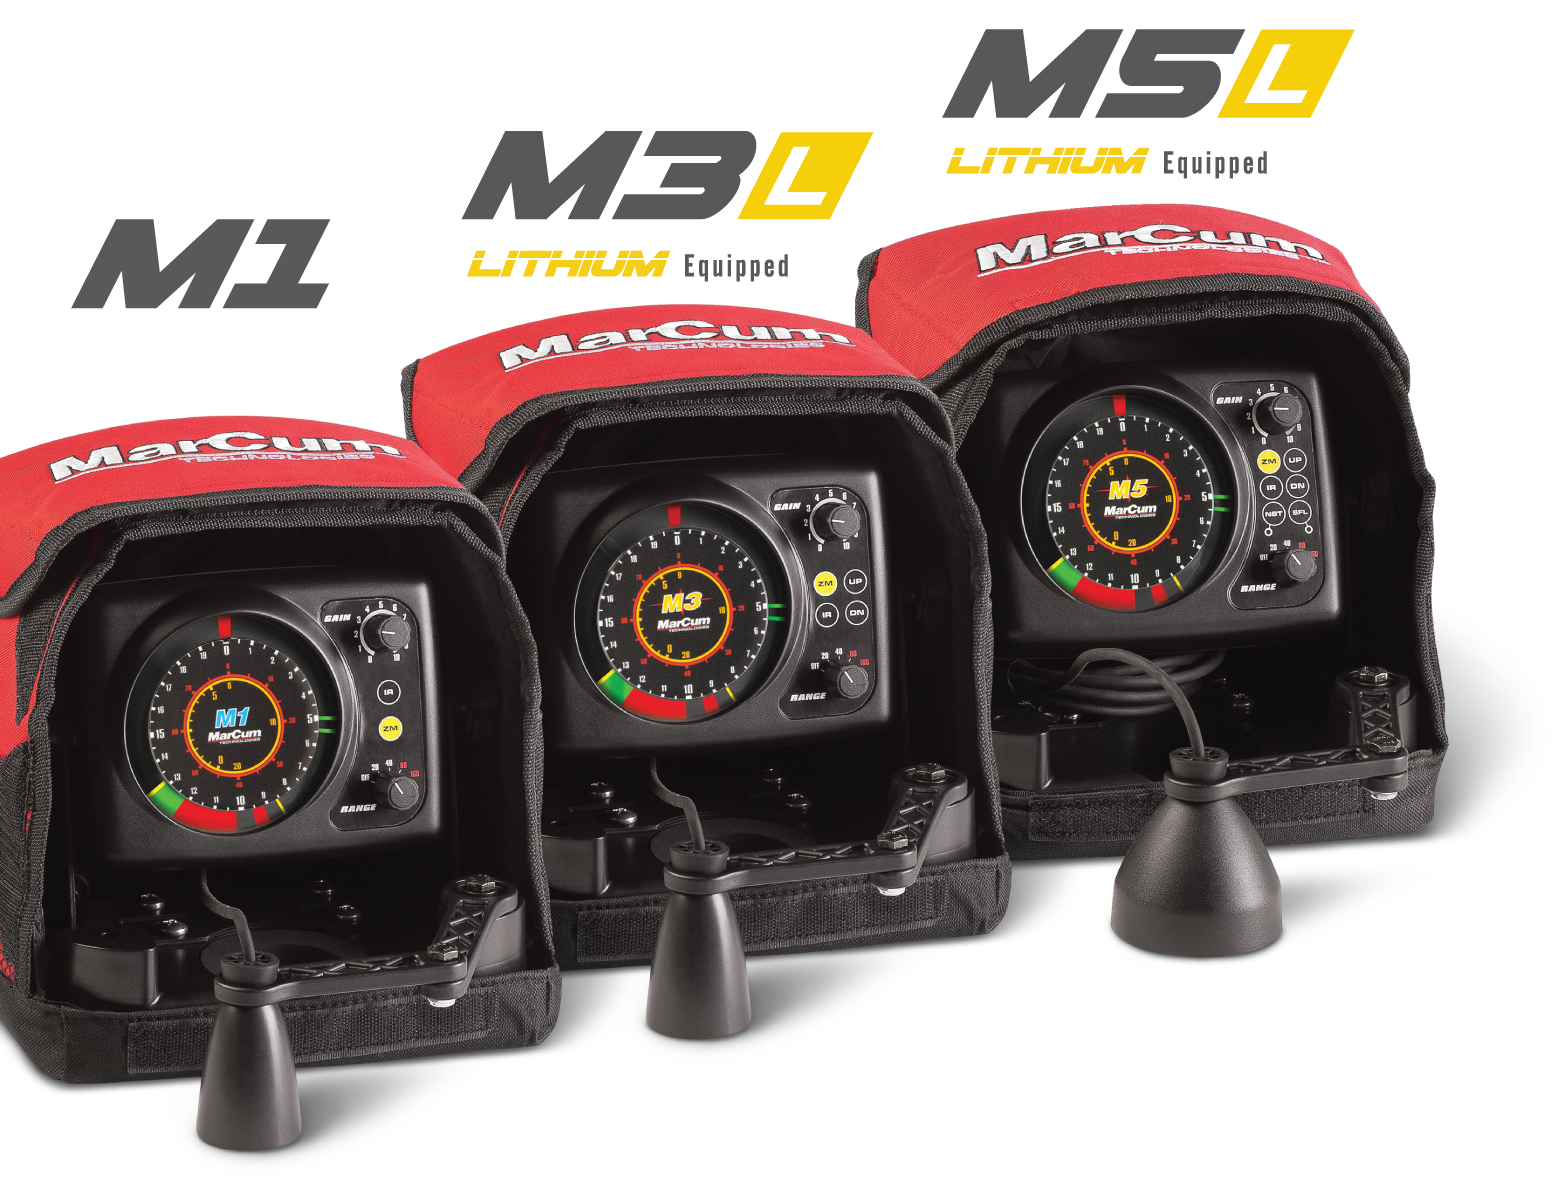 M-series flasher line up M1, M3L, M5L rows